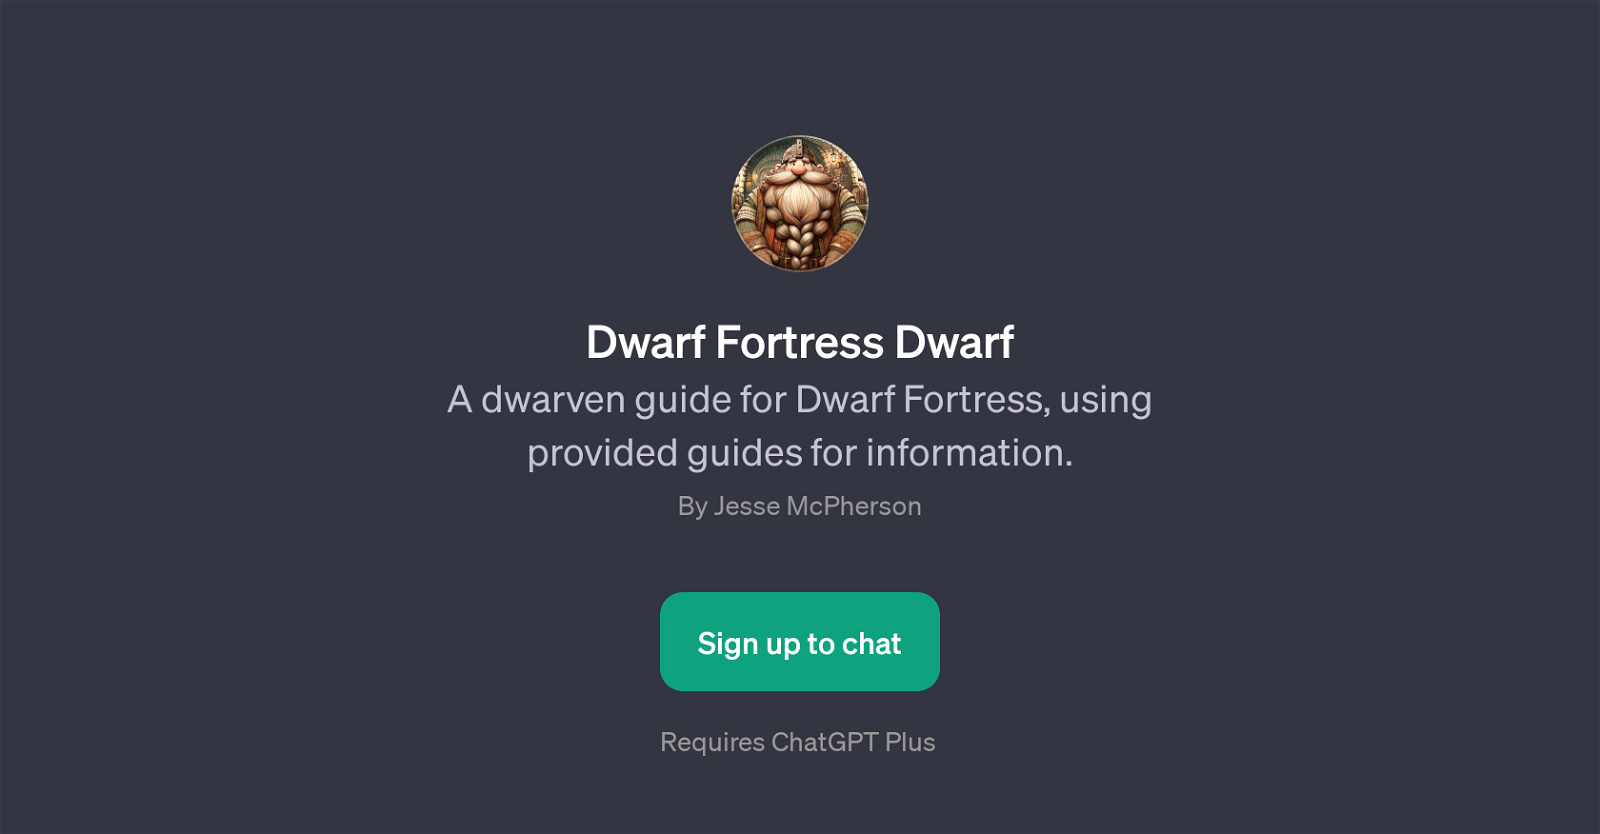 Dwarf Fortress Dwarf website